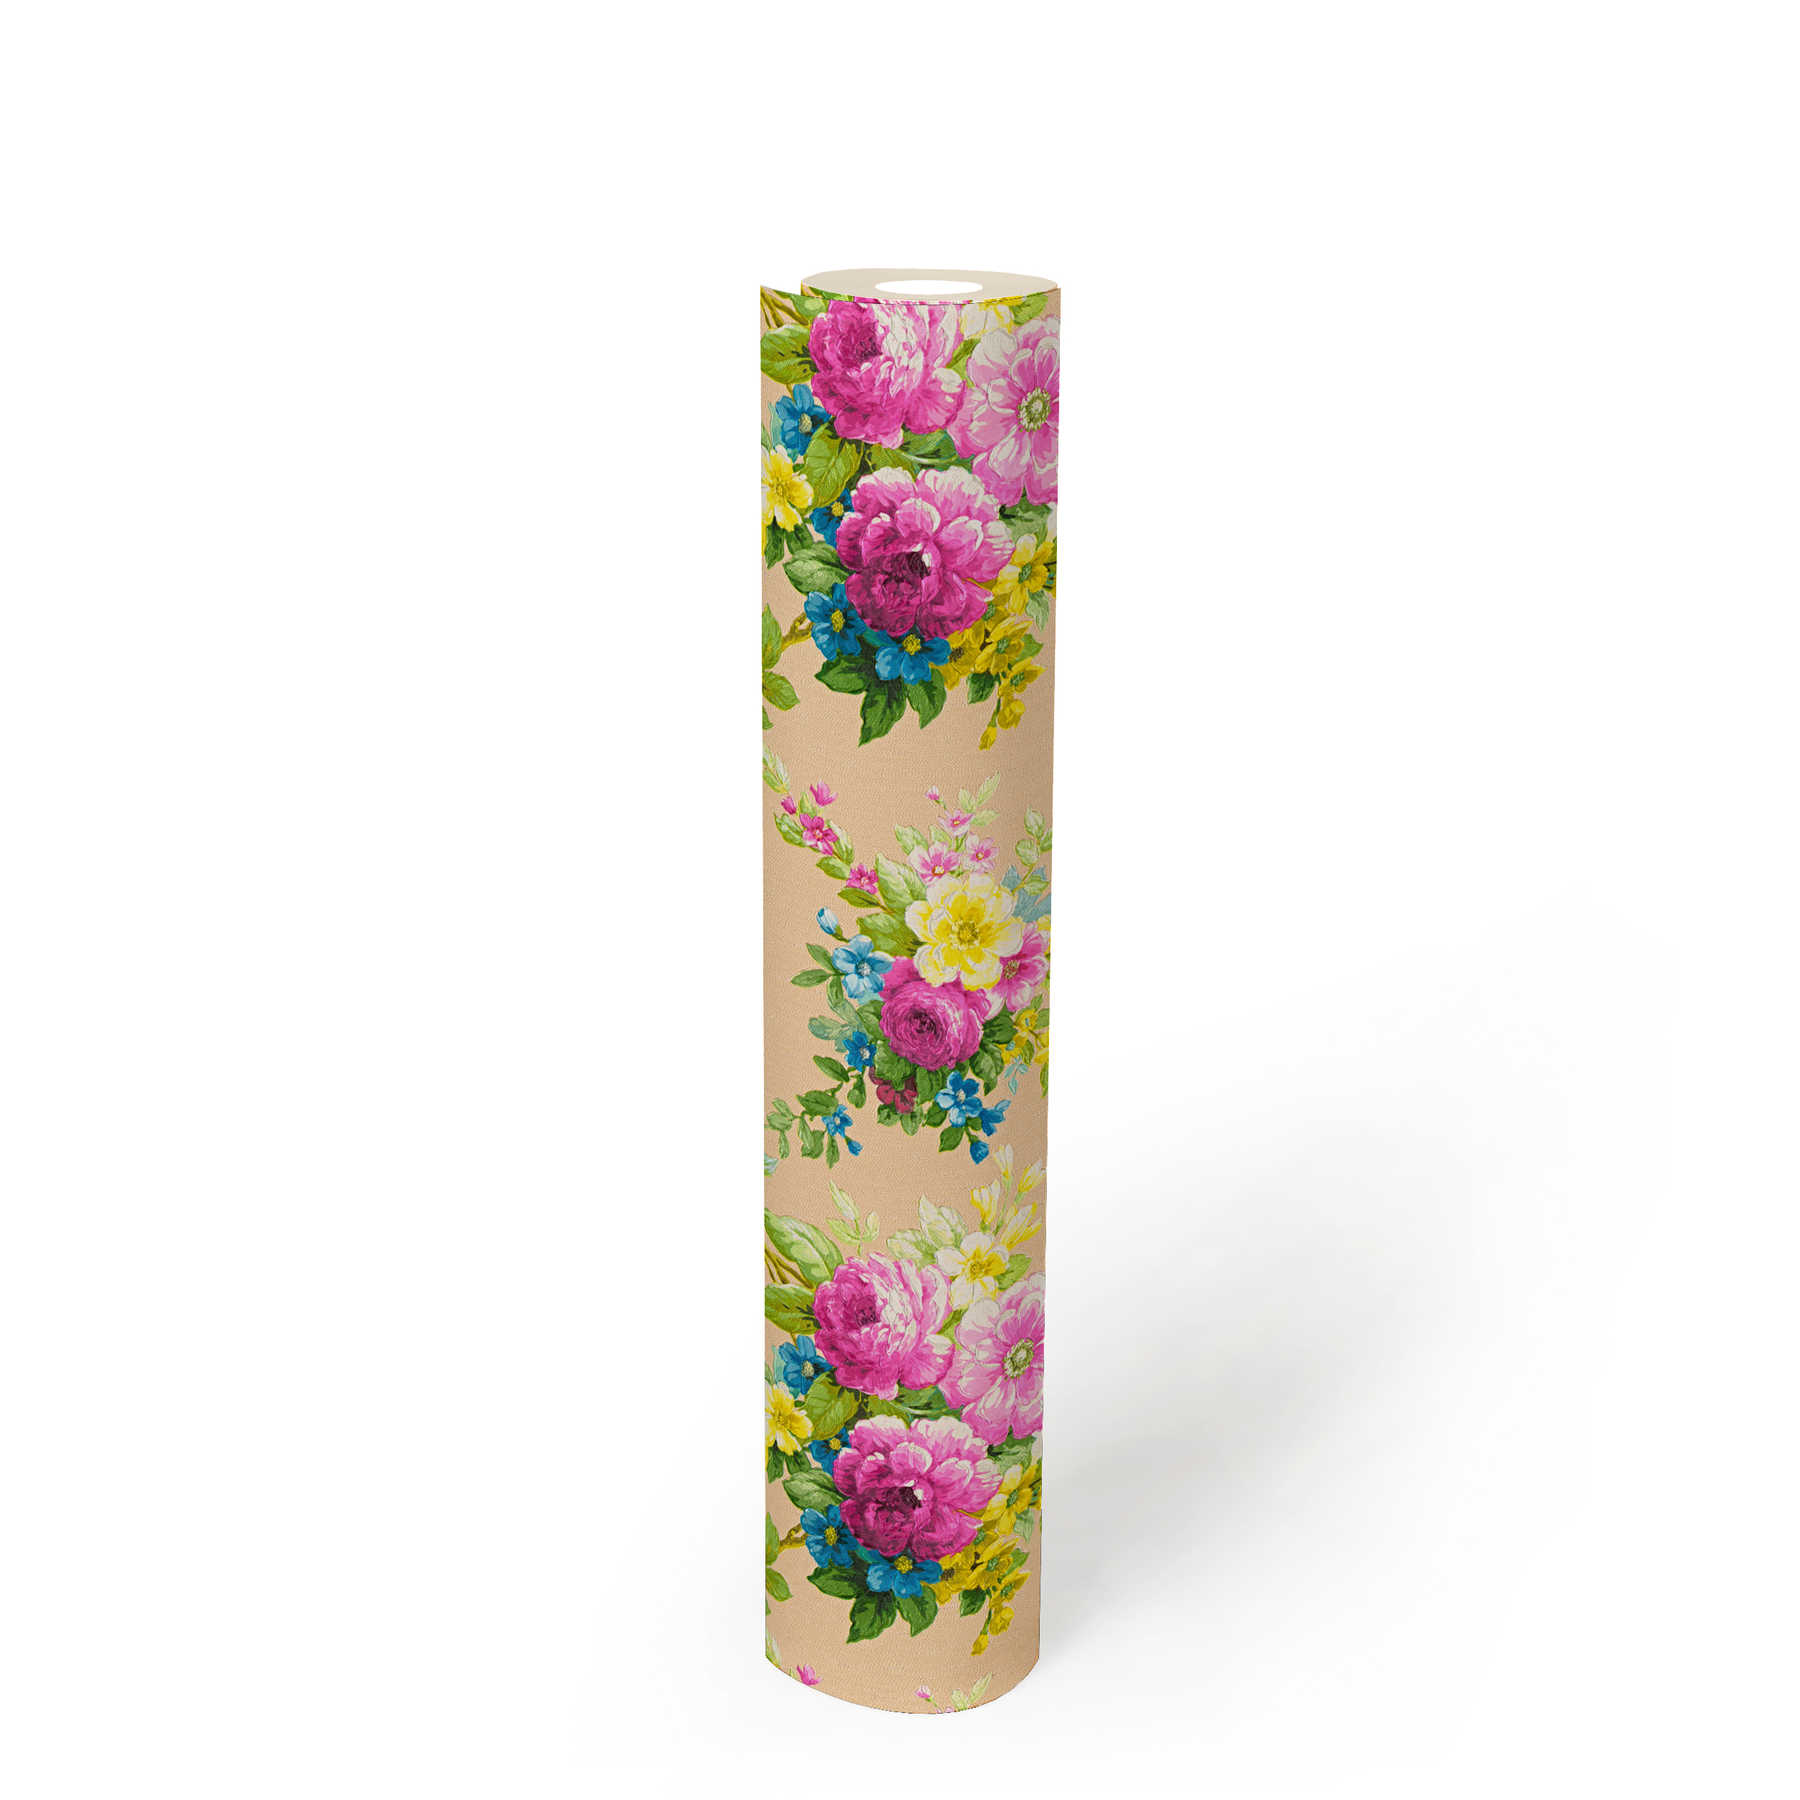             Tapete Blumen Dekor Blütenornament mit Metallic Effekt – Bunt
        